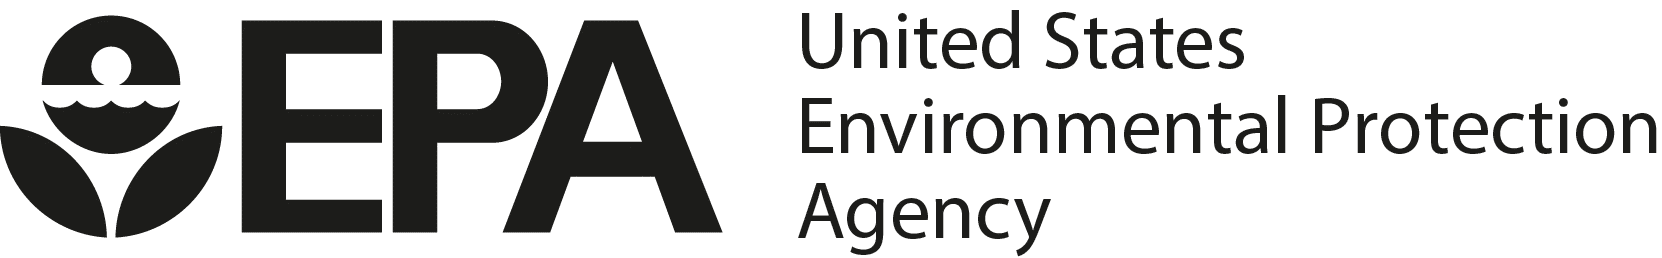 epa-environmental_protection_agency-logo